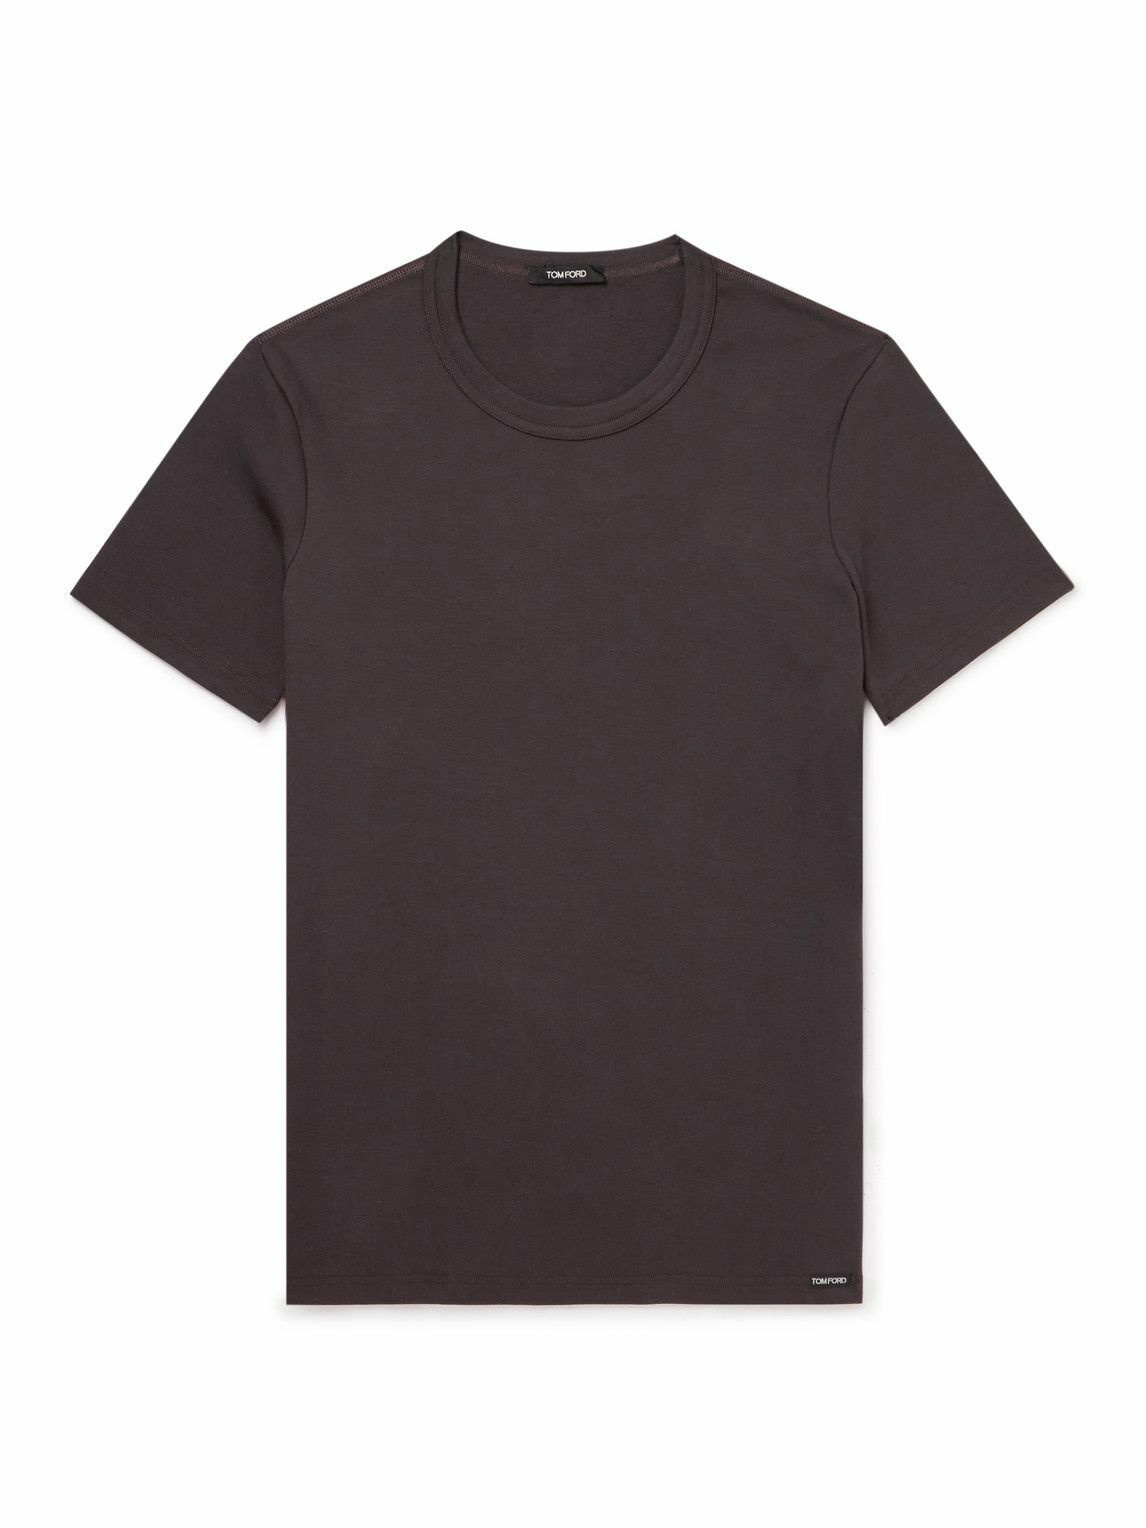 TOM FORD - Logo-Appliquéd Stretch-Cotton Jersey T-Shirt - Brown TOM FORD